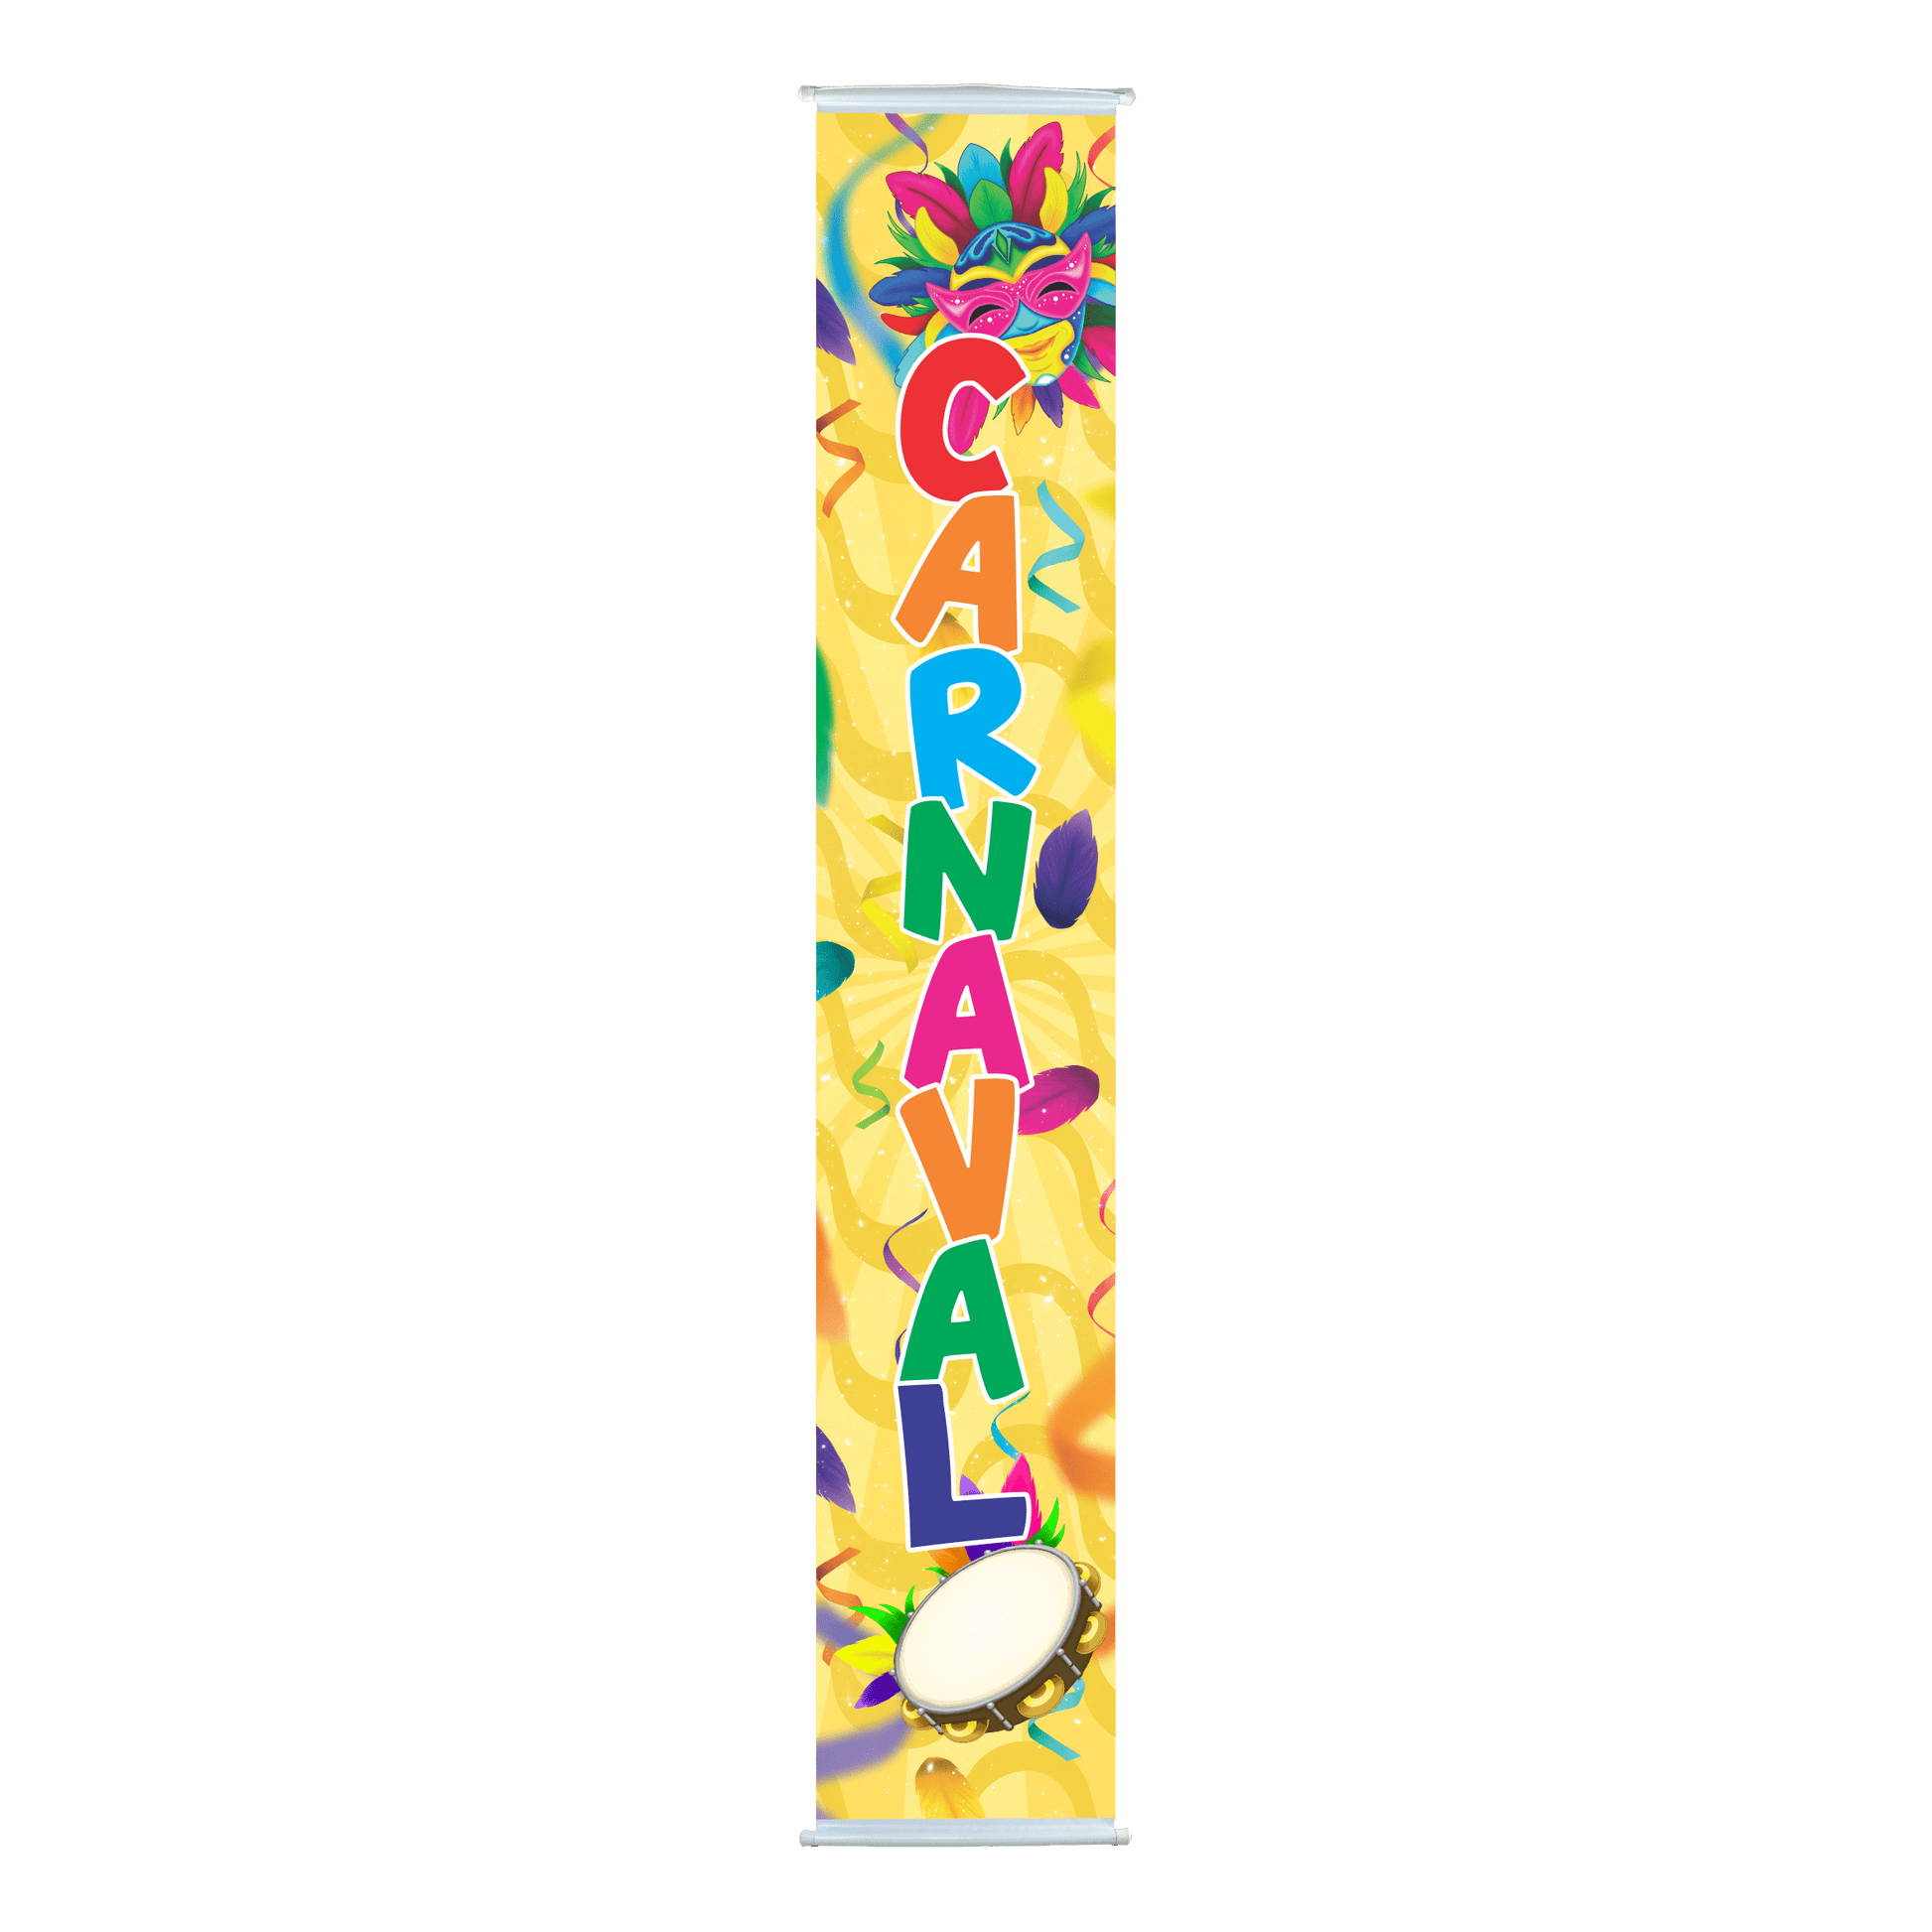 Comemoratio Banner de Carnaval G - 2 m x 35 cm - 1 un.